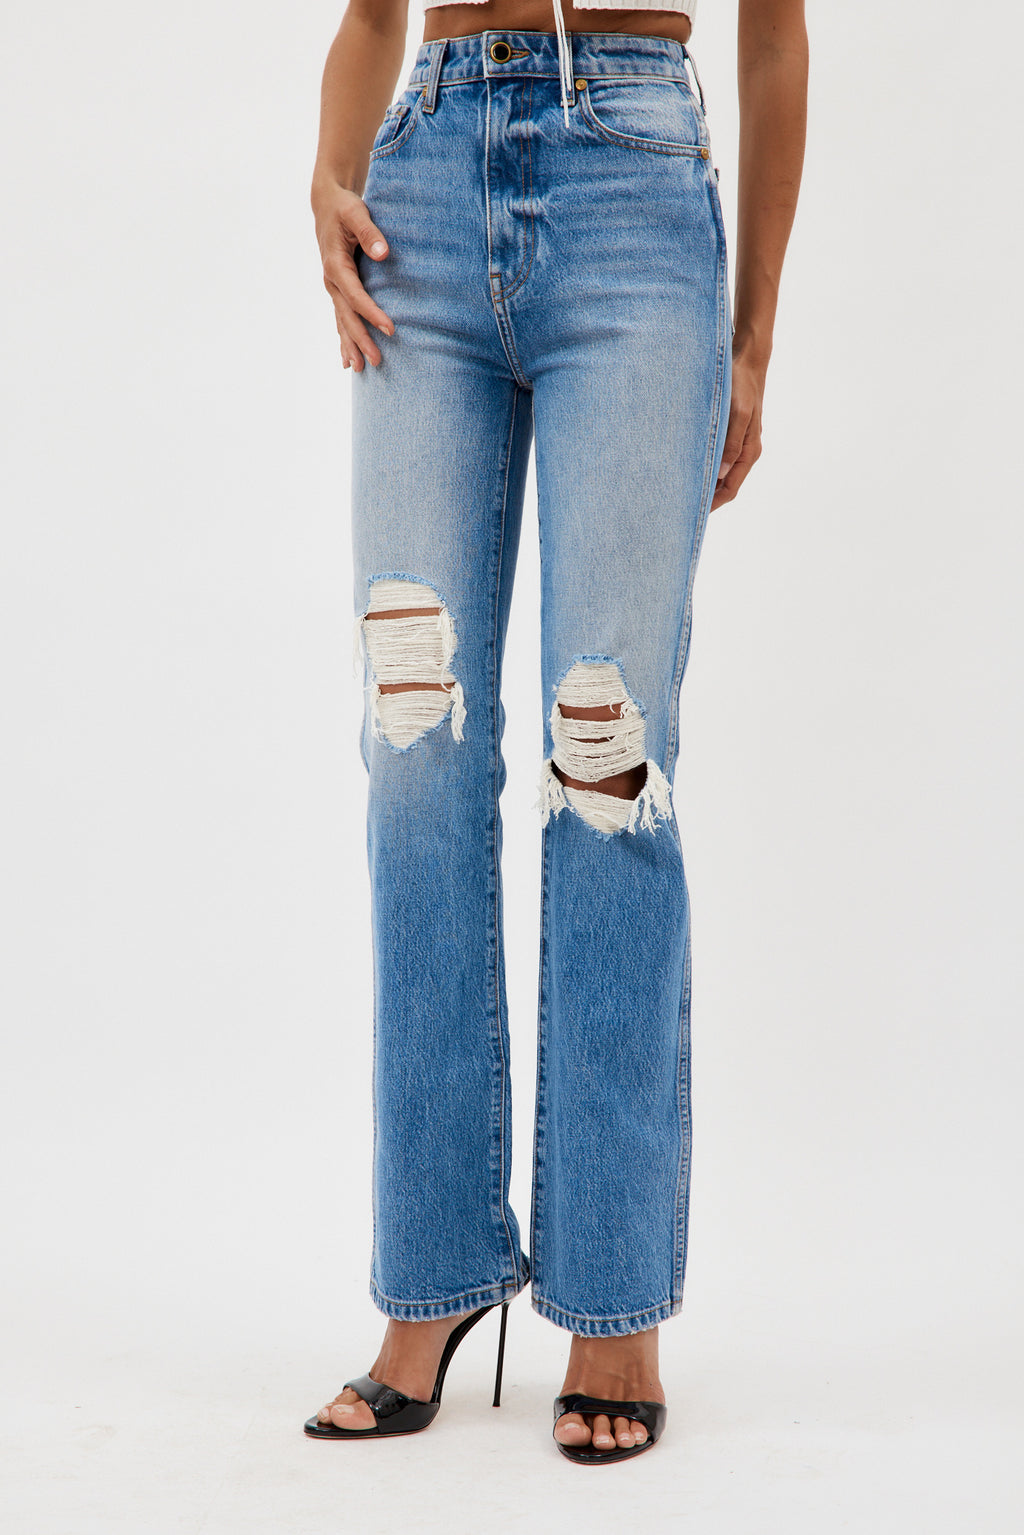 Danielle Portland Jeans